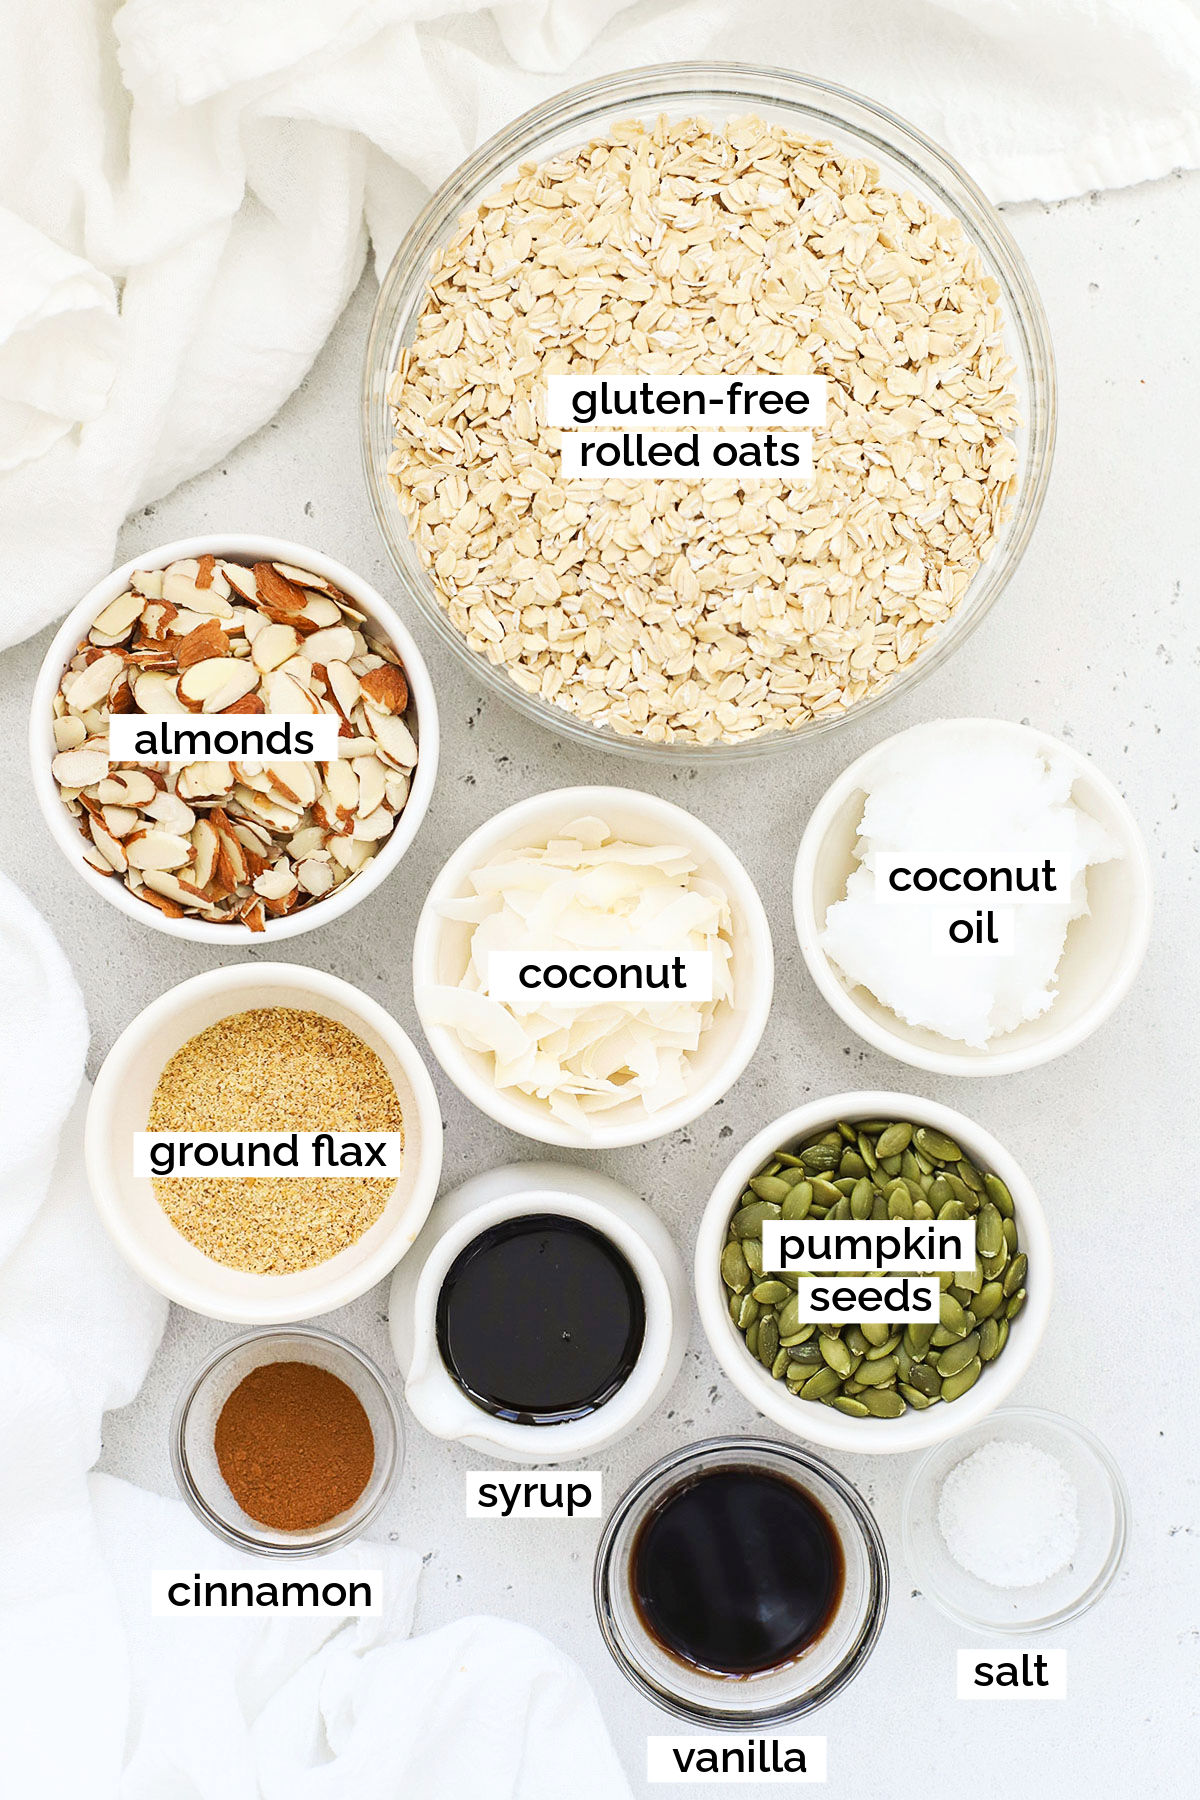 ingredients for homemade gluten-free granola